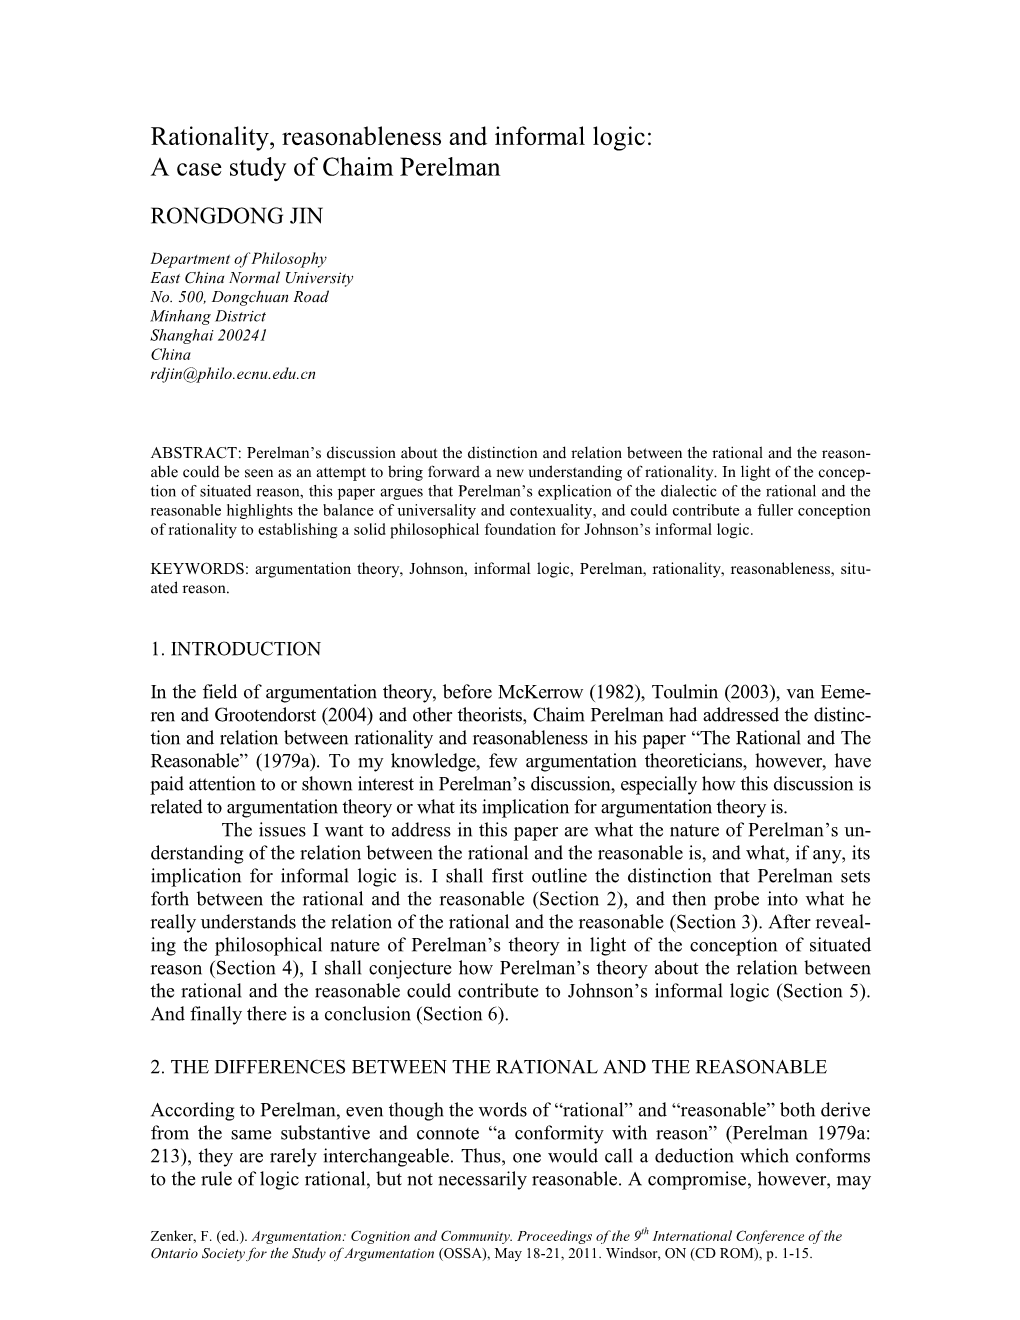 Rationality, Reasonableness and Informal Logic: a Case Study of Chaim Perelman